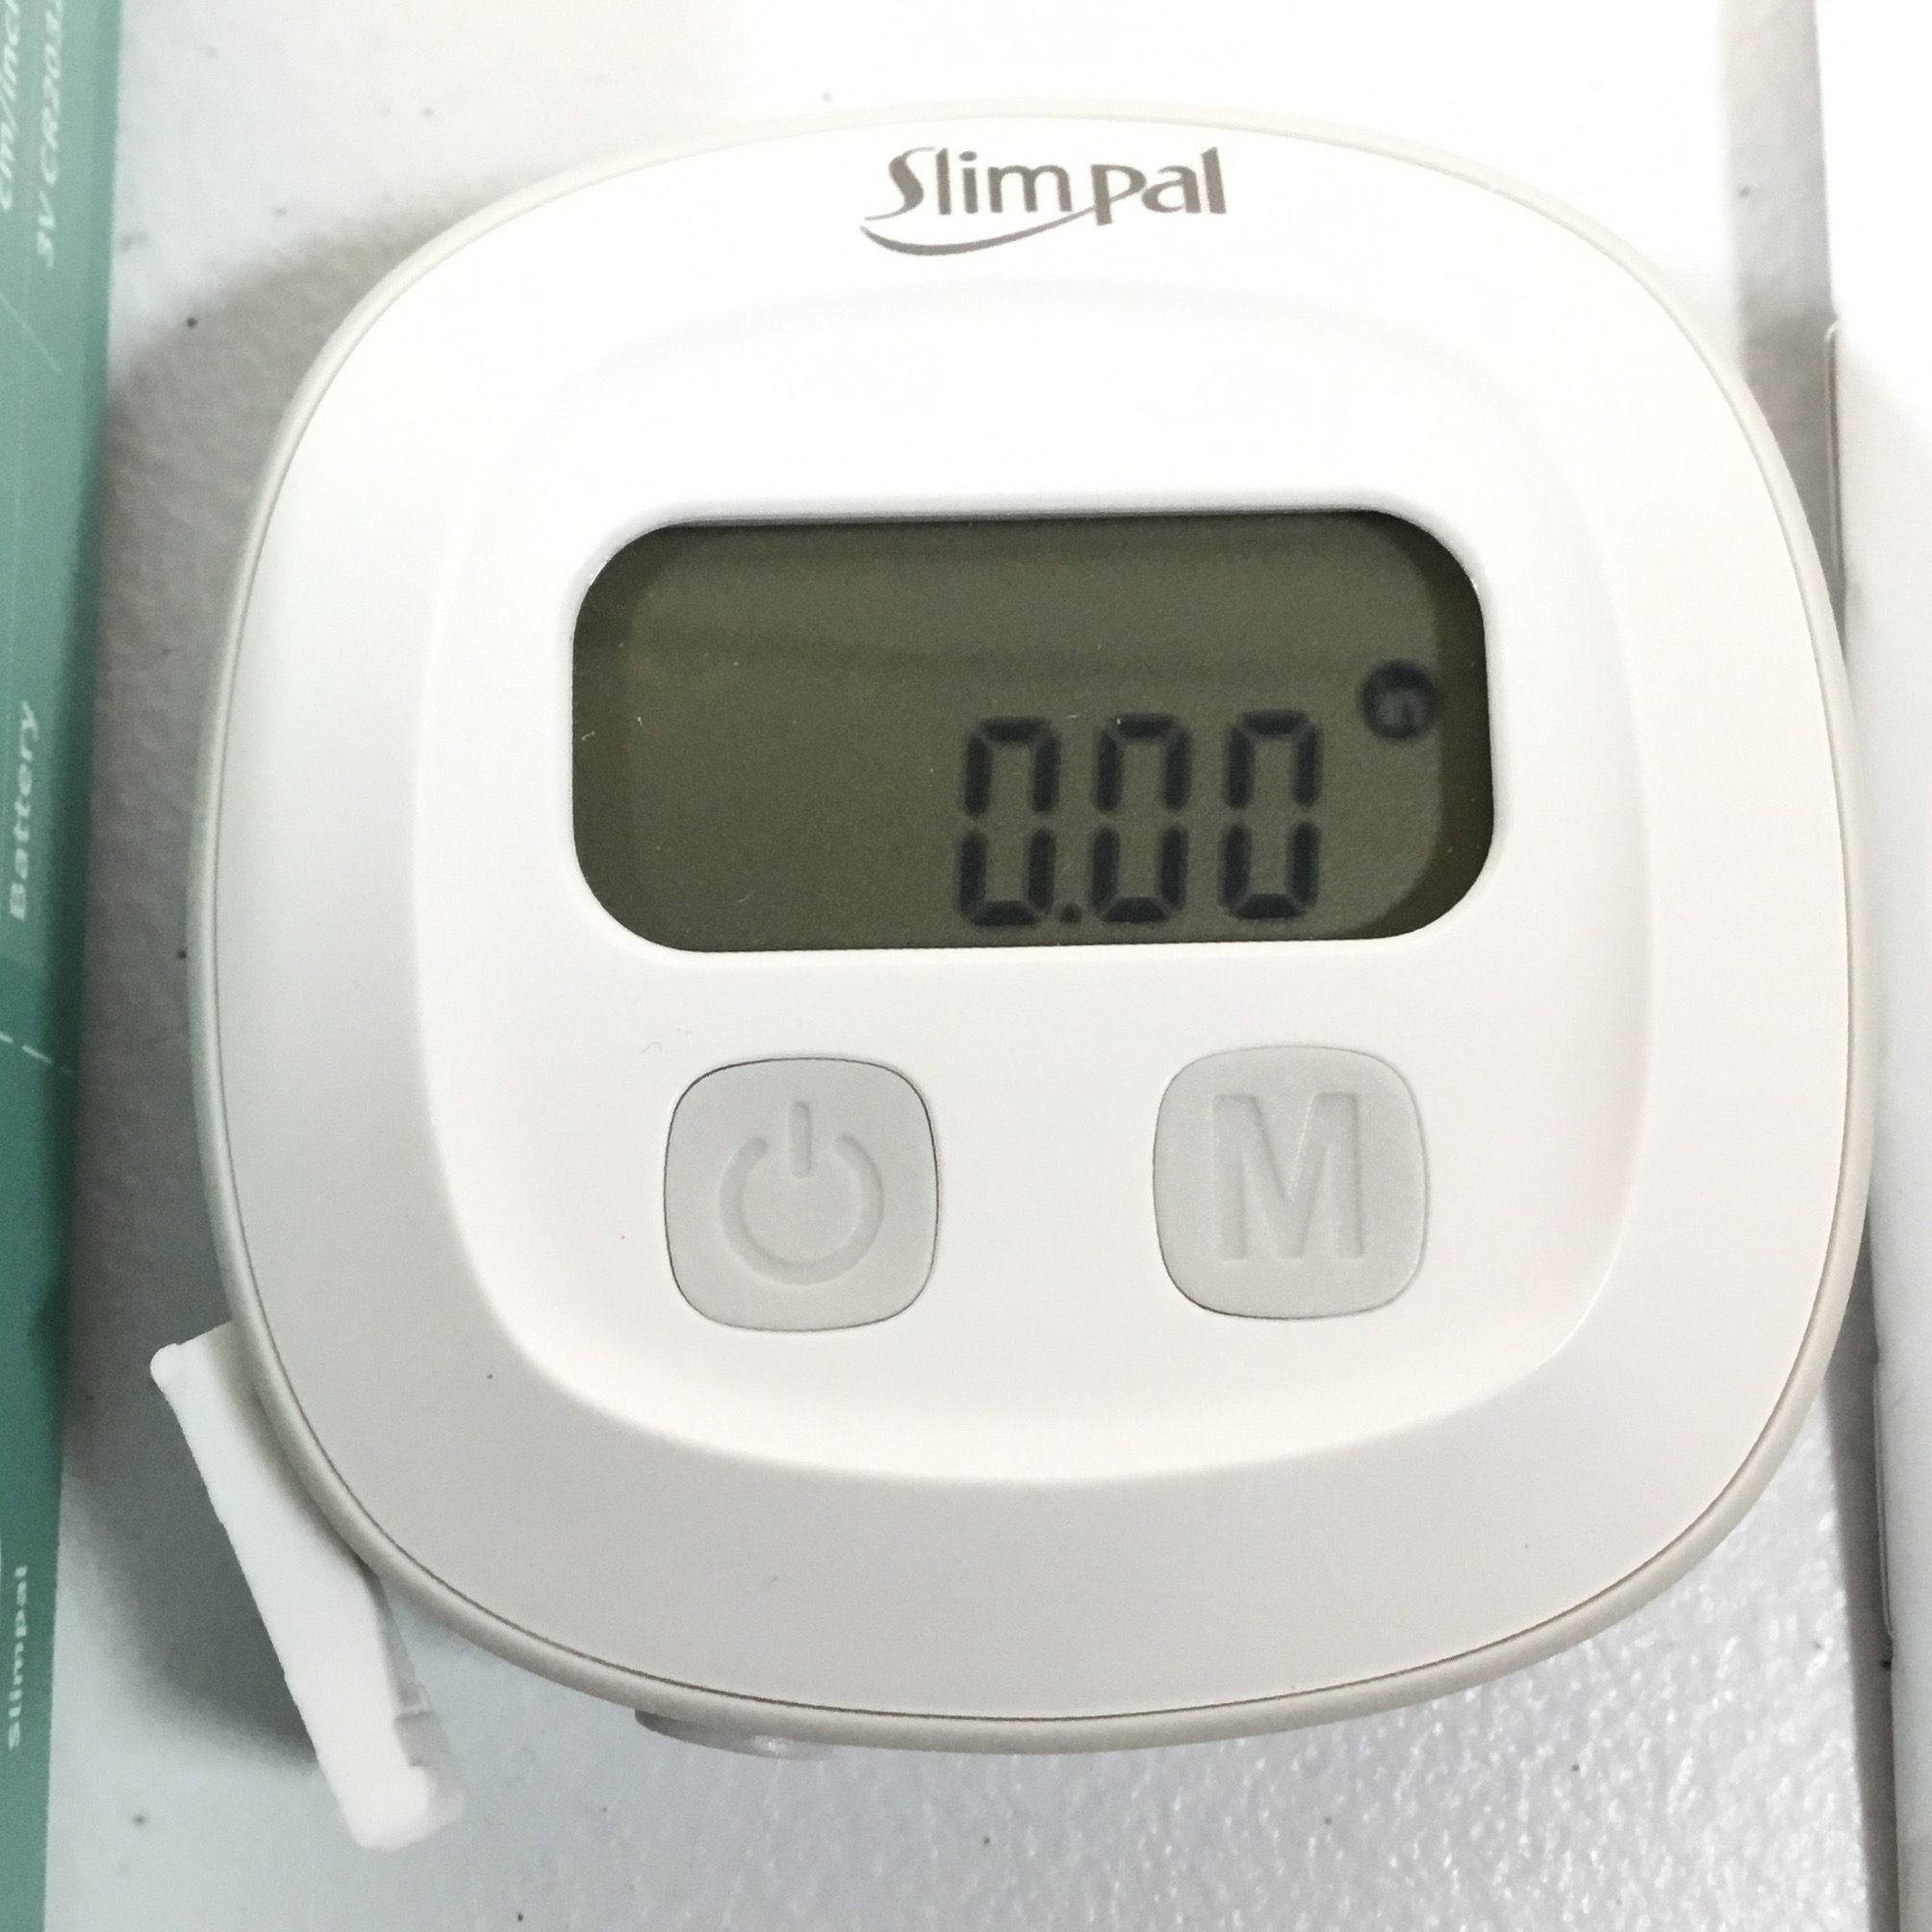 Slimpal smart tape measure lite, Model:84114, Open Box